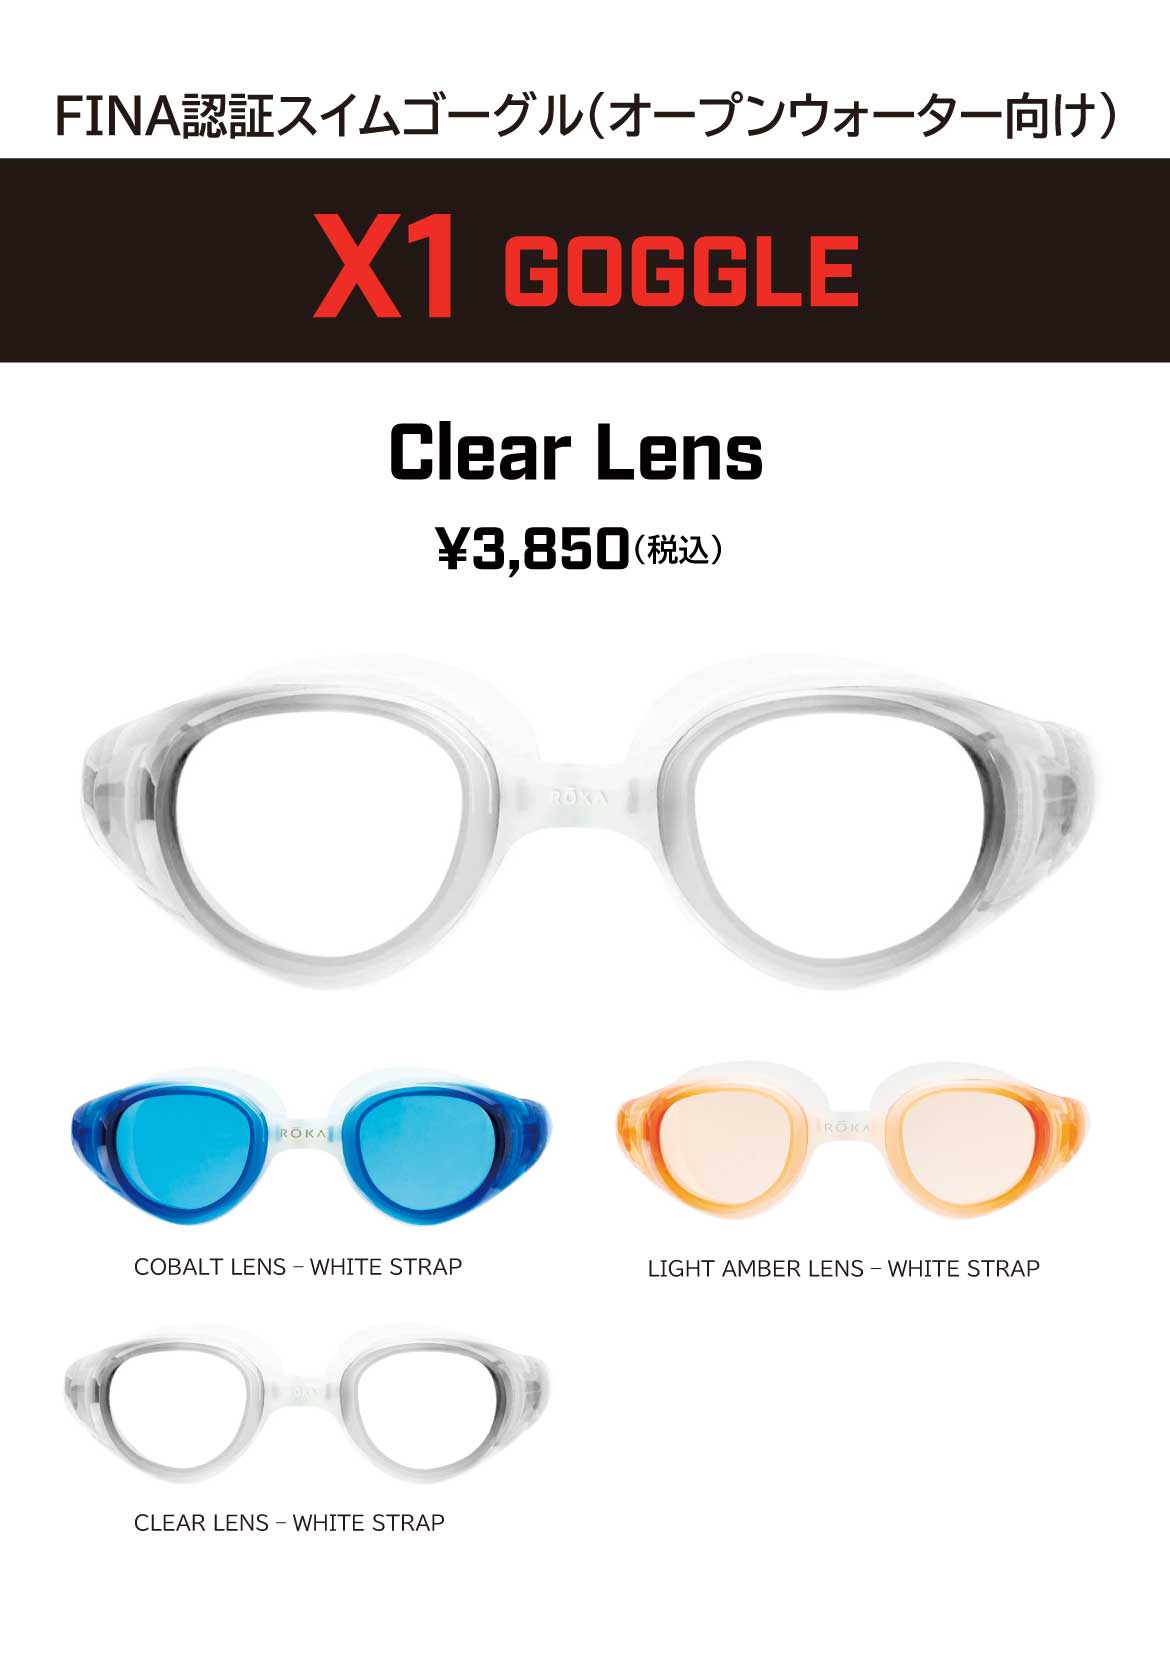 X1 GOGGLE Clear Lens